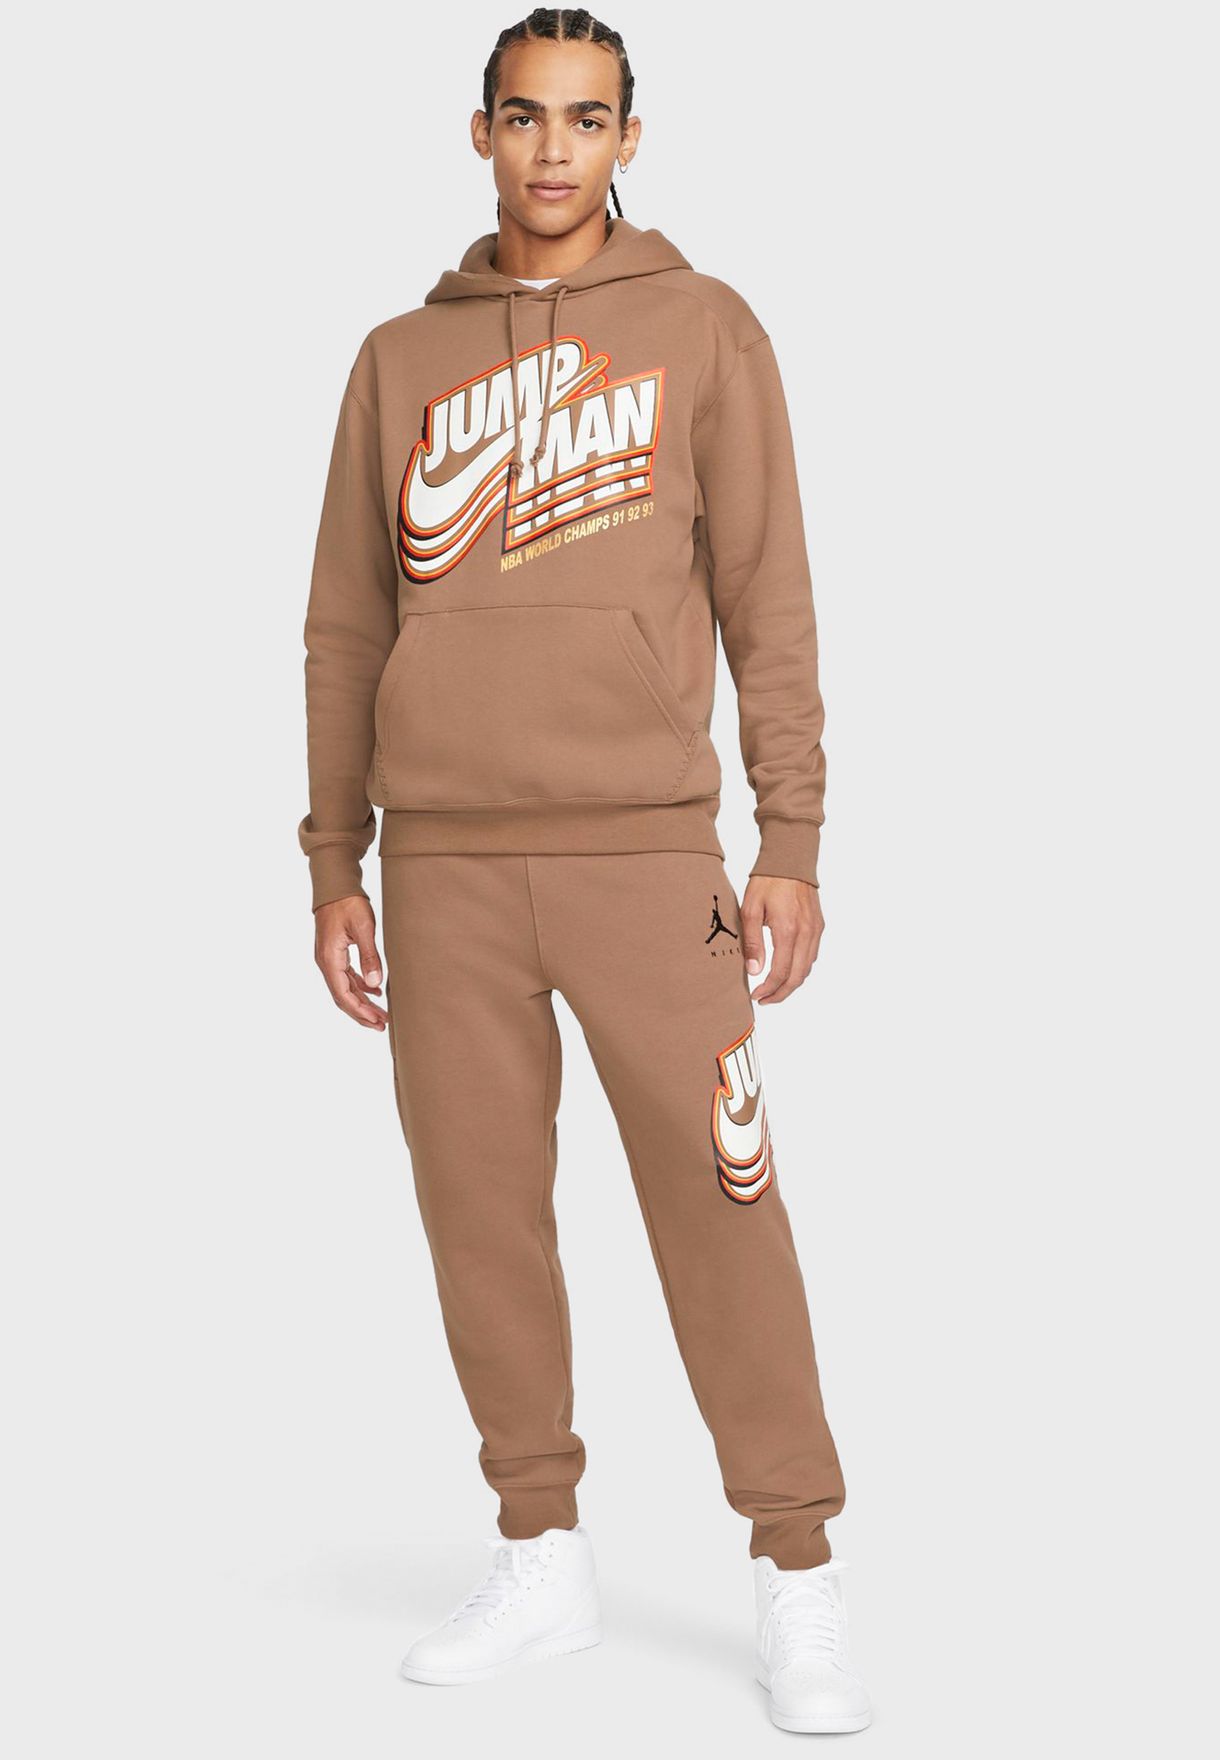 <ul><li>Soft and comfortable poly-cotton fabric</li><li>Hoodie with adjustable drawstrings and long sleeves</li><li>Dual side slip in kangaroo pocket</li><li>Nike Jordan Jumpman logo branding print</li><li>Each item sold separately</li></ul>